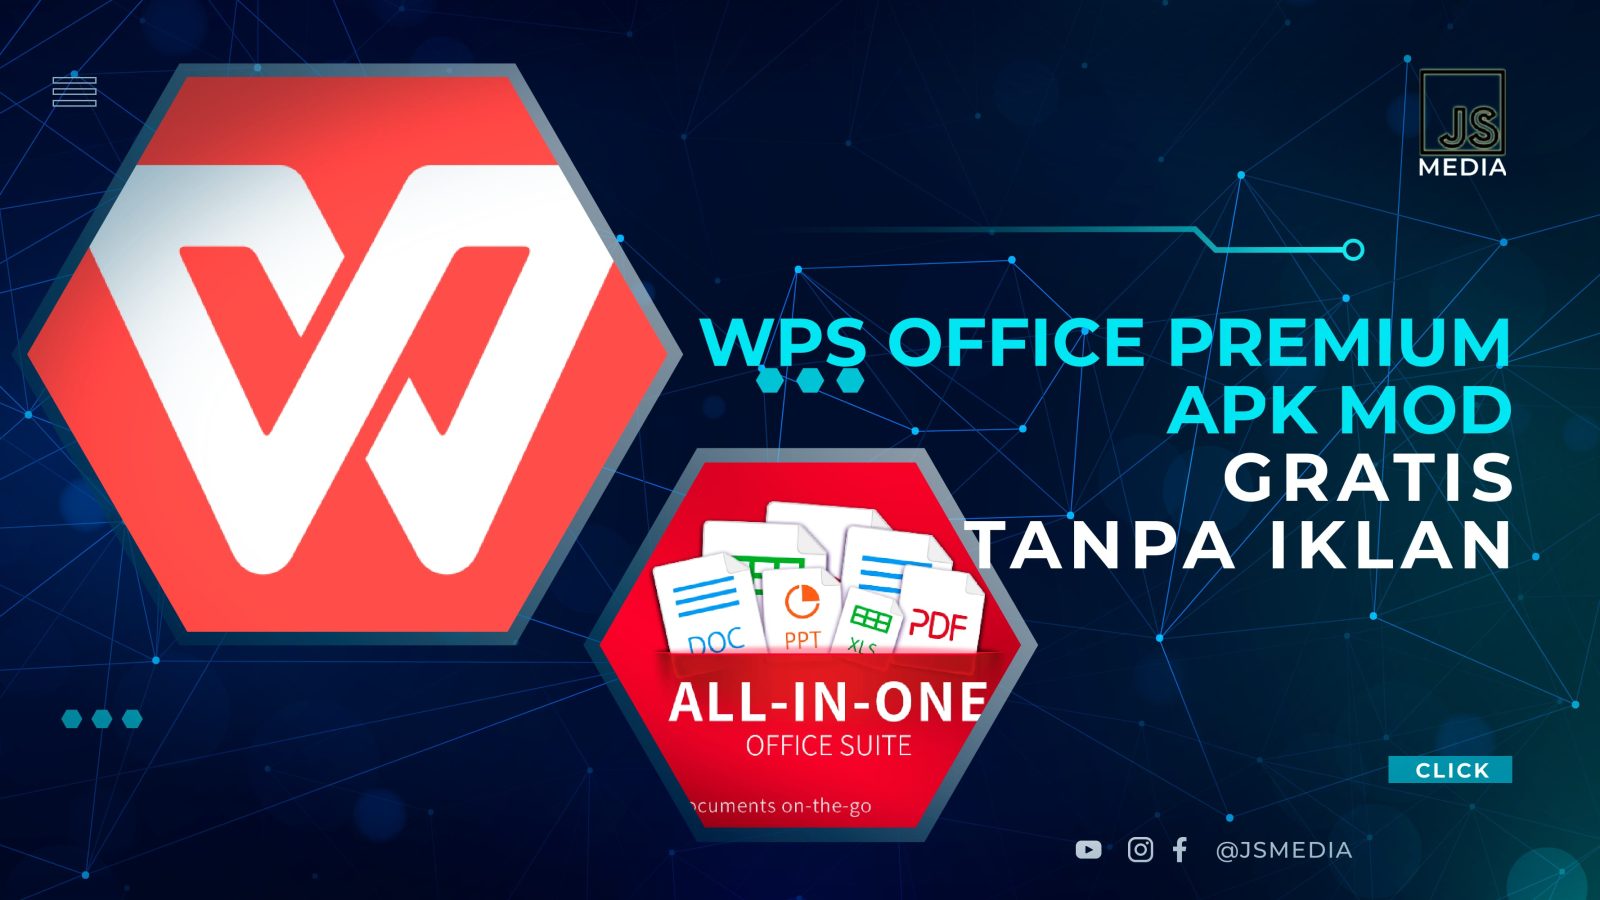 WPS Office Premium APK Mod Gratis